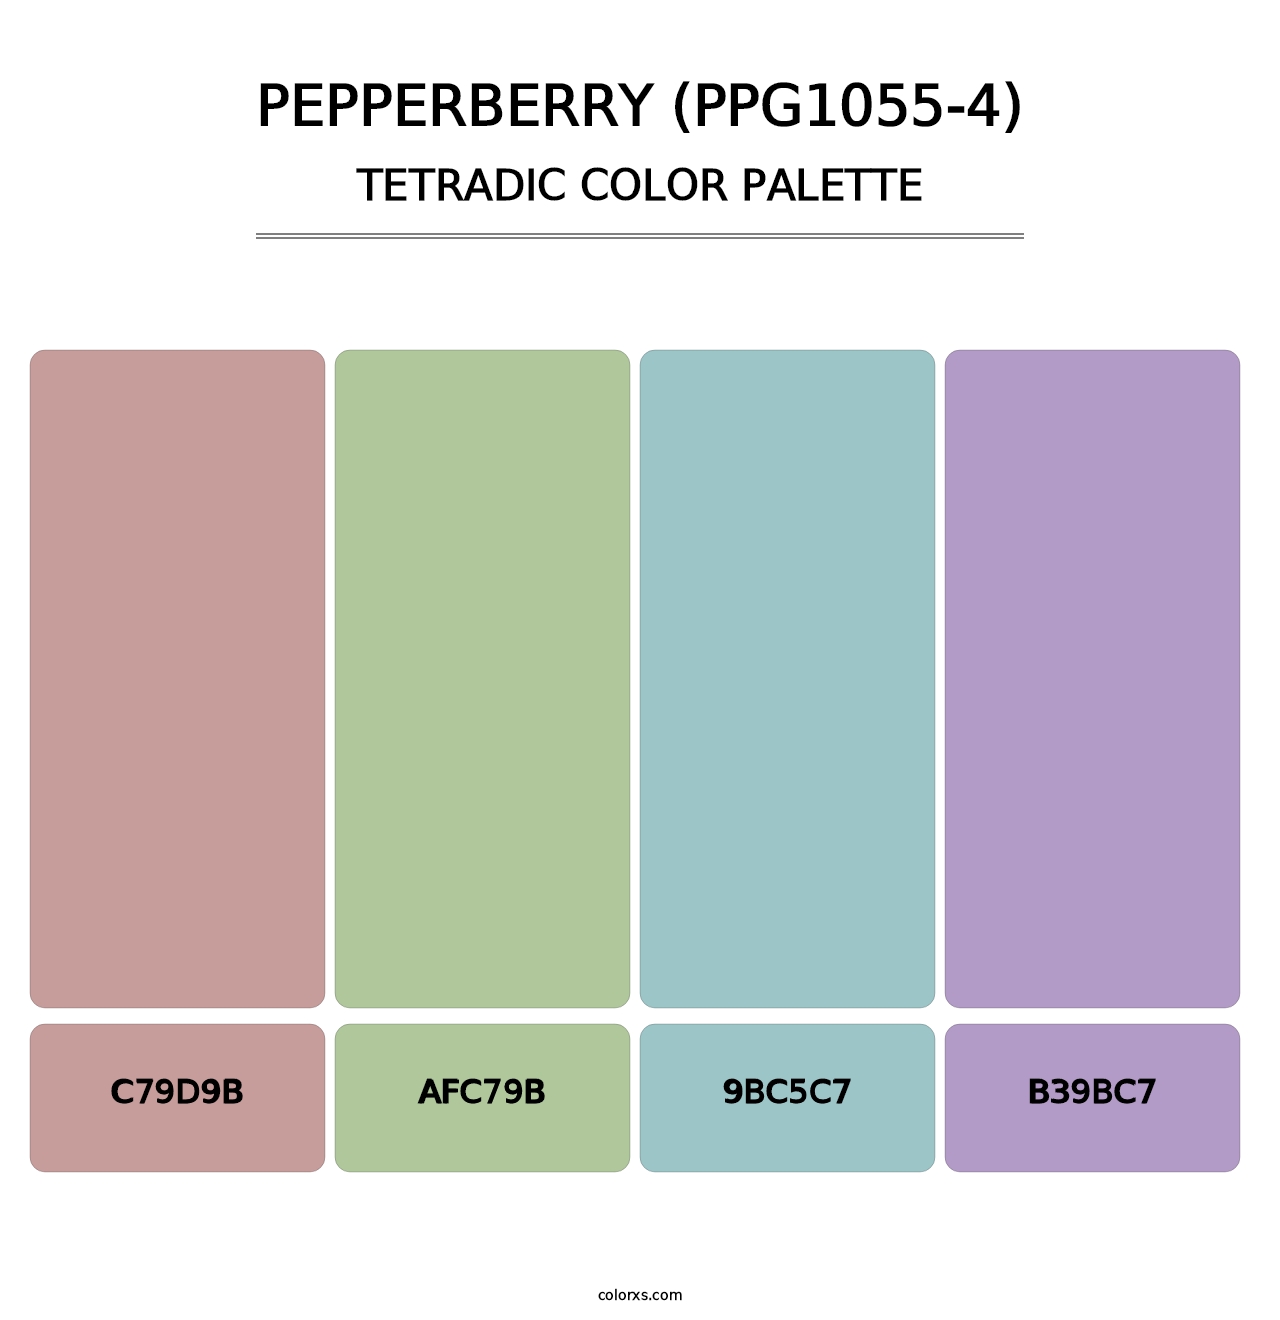 Pepperberry (PPG1055-4) - Tetradic Color Palette